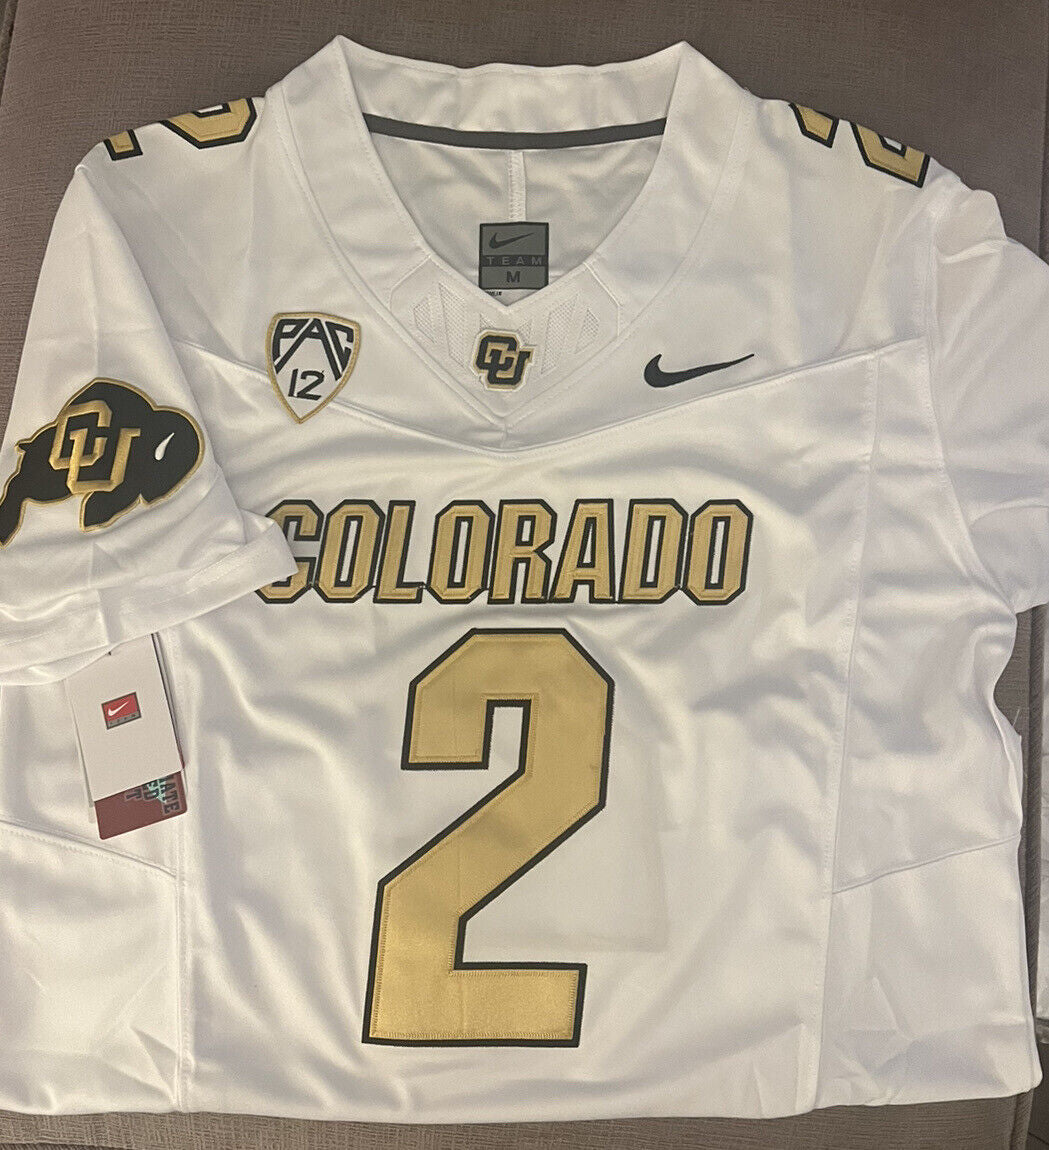 Shaduer Sanders Colorado Buffaloes Nike Alternate NCAA College Football Player Jersey - White